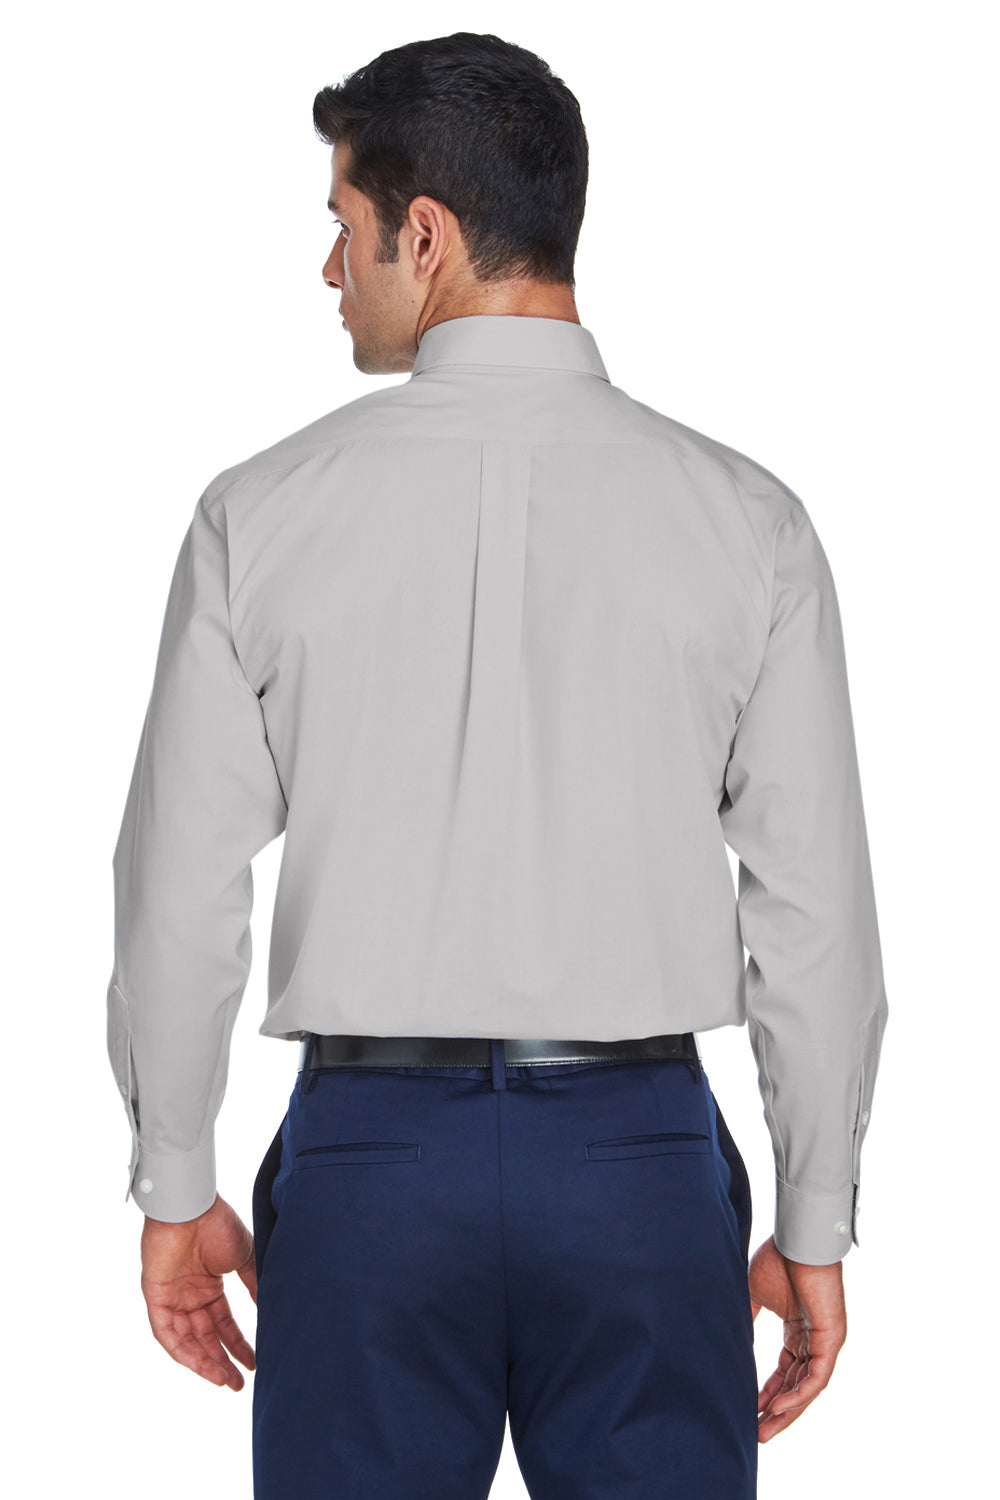 Devon & Jones D620 Mens Crown Woven Collection Wrinkle Resistant Long Sleeve Button Down Shirt w/ Pocket Silver Grey Back